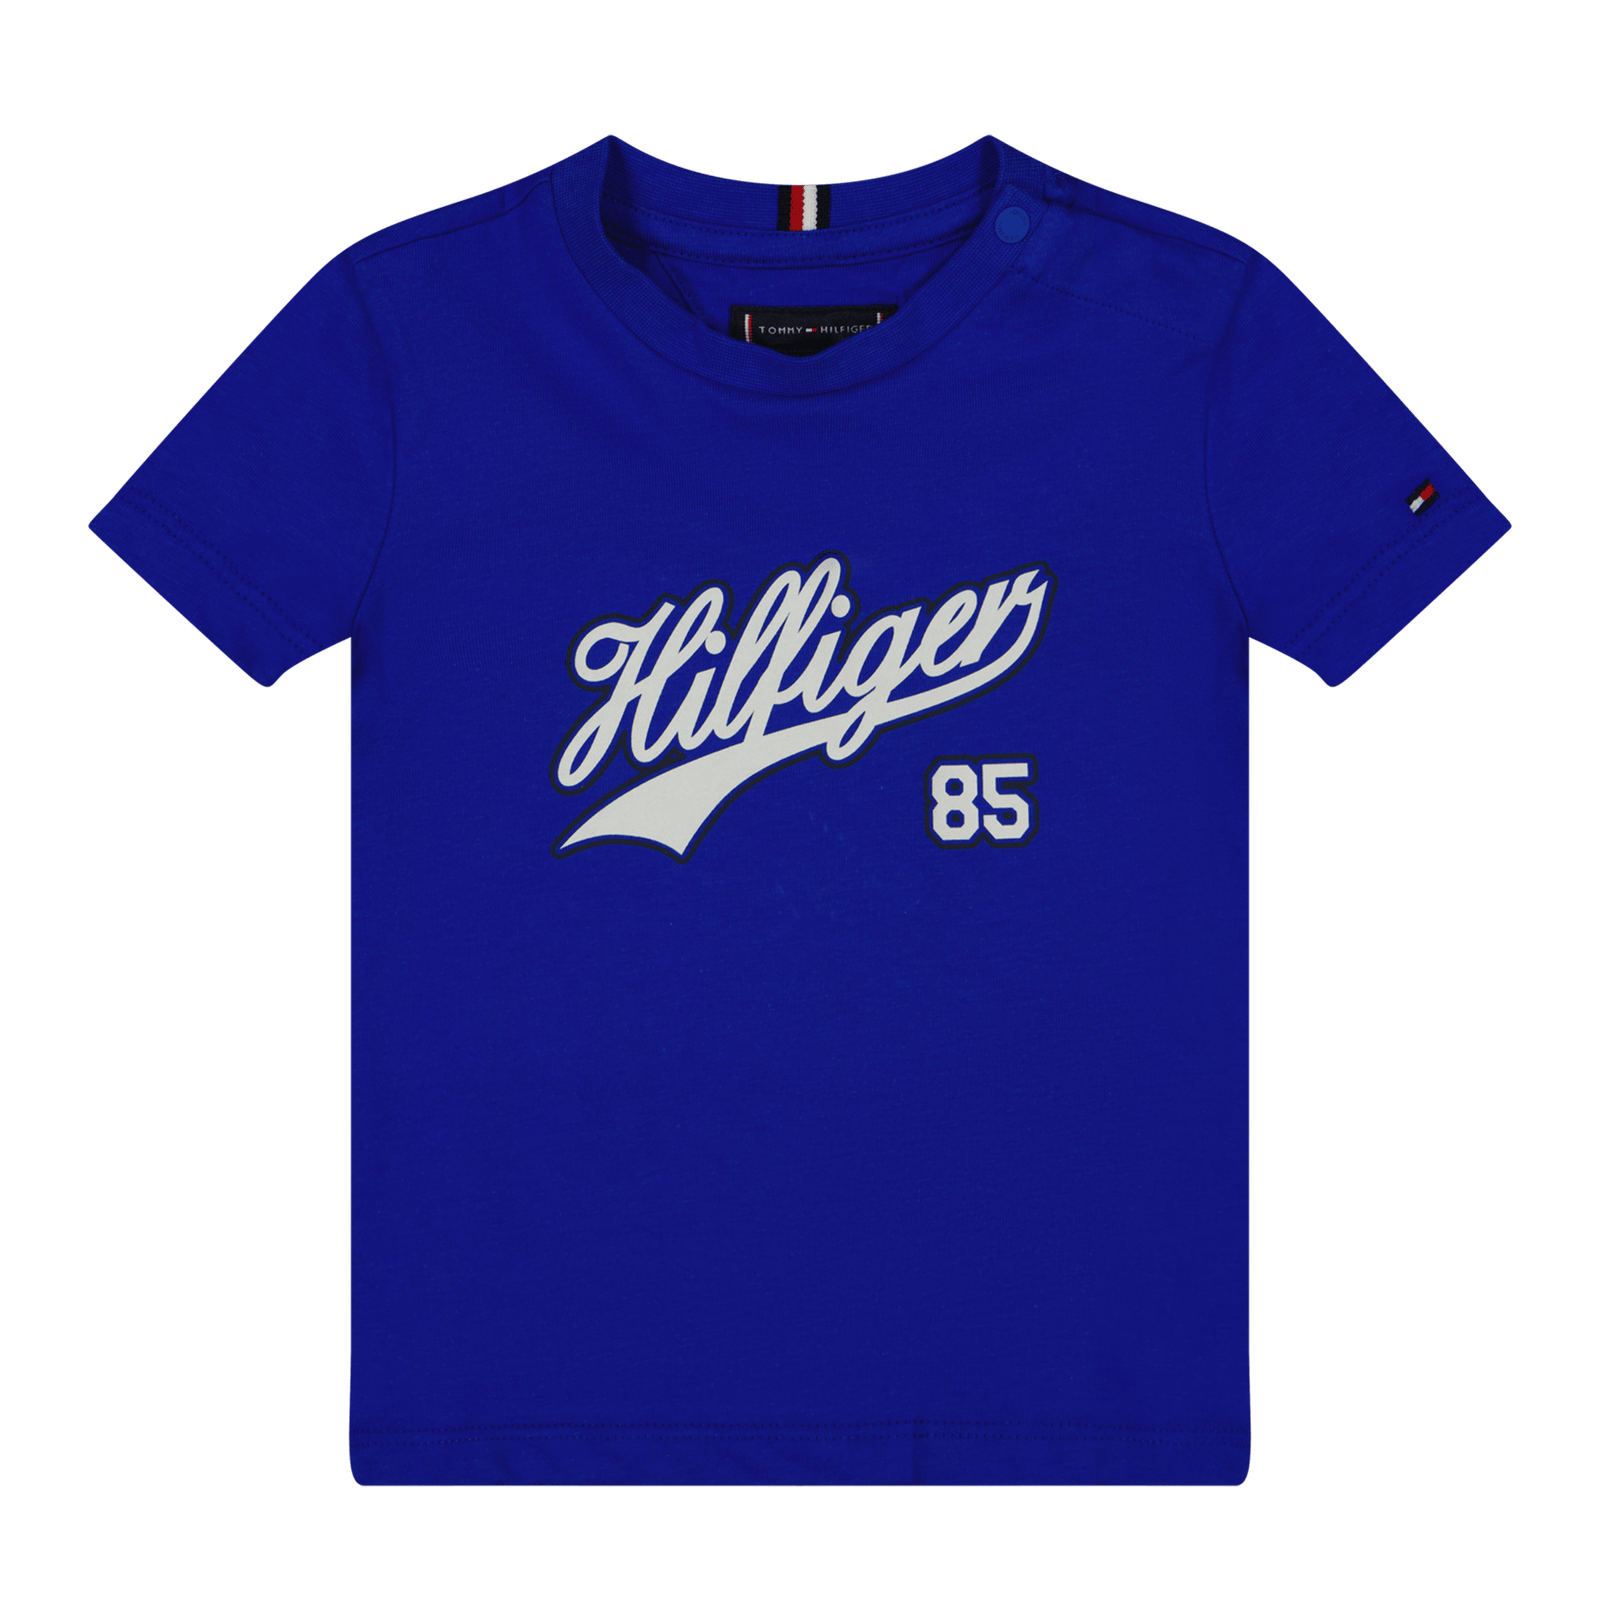 Tommy Hilfiger Baby Jongens T-Shirt Cobalt Blauw 74